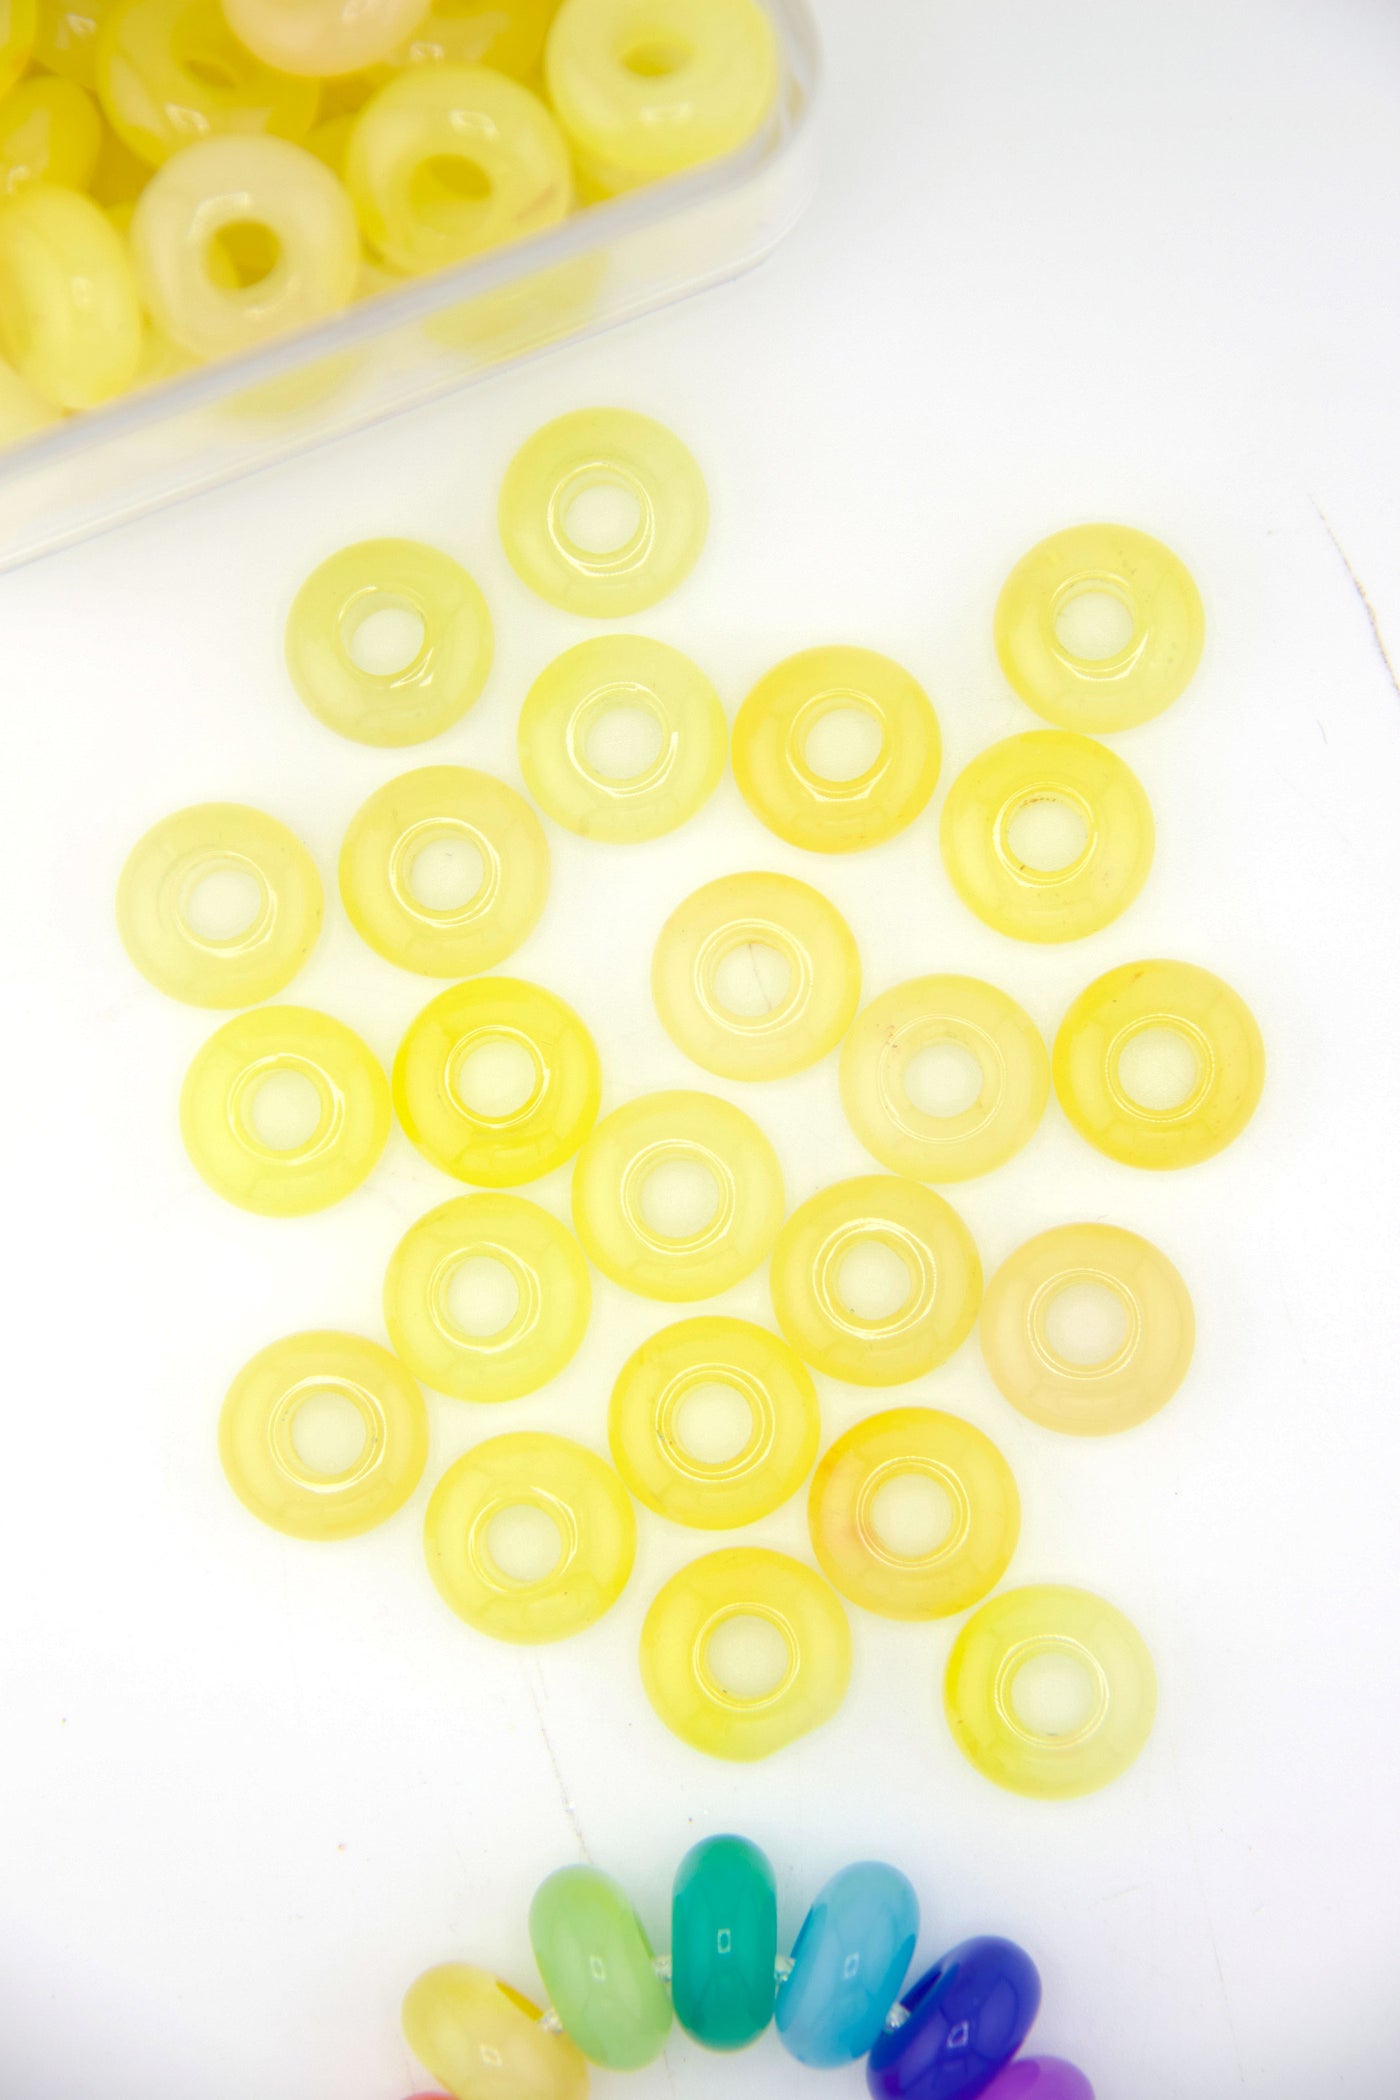 Yellow Candy Jade Large Hole Euro Beads, Slider Beads, 15mm, 5mm Hole